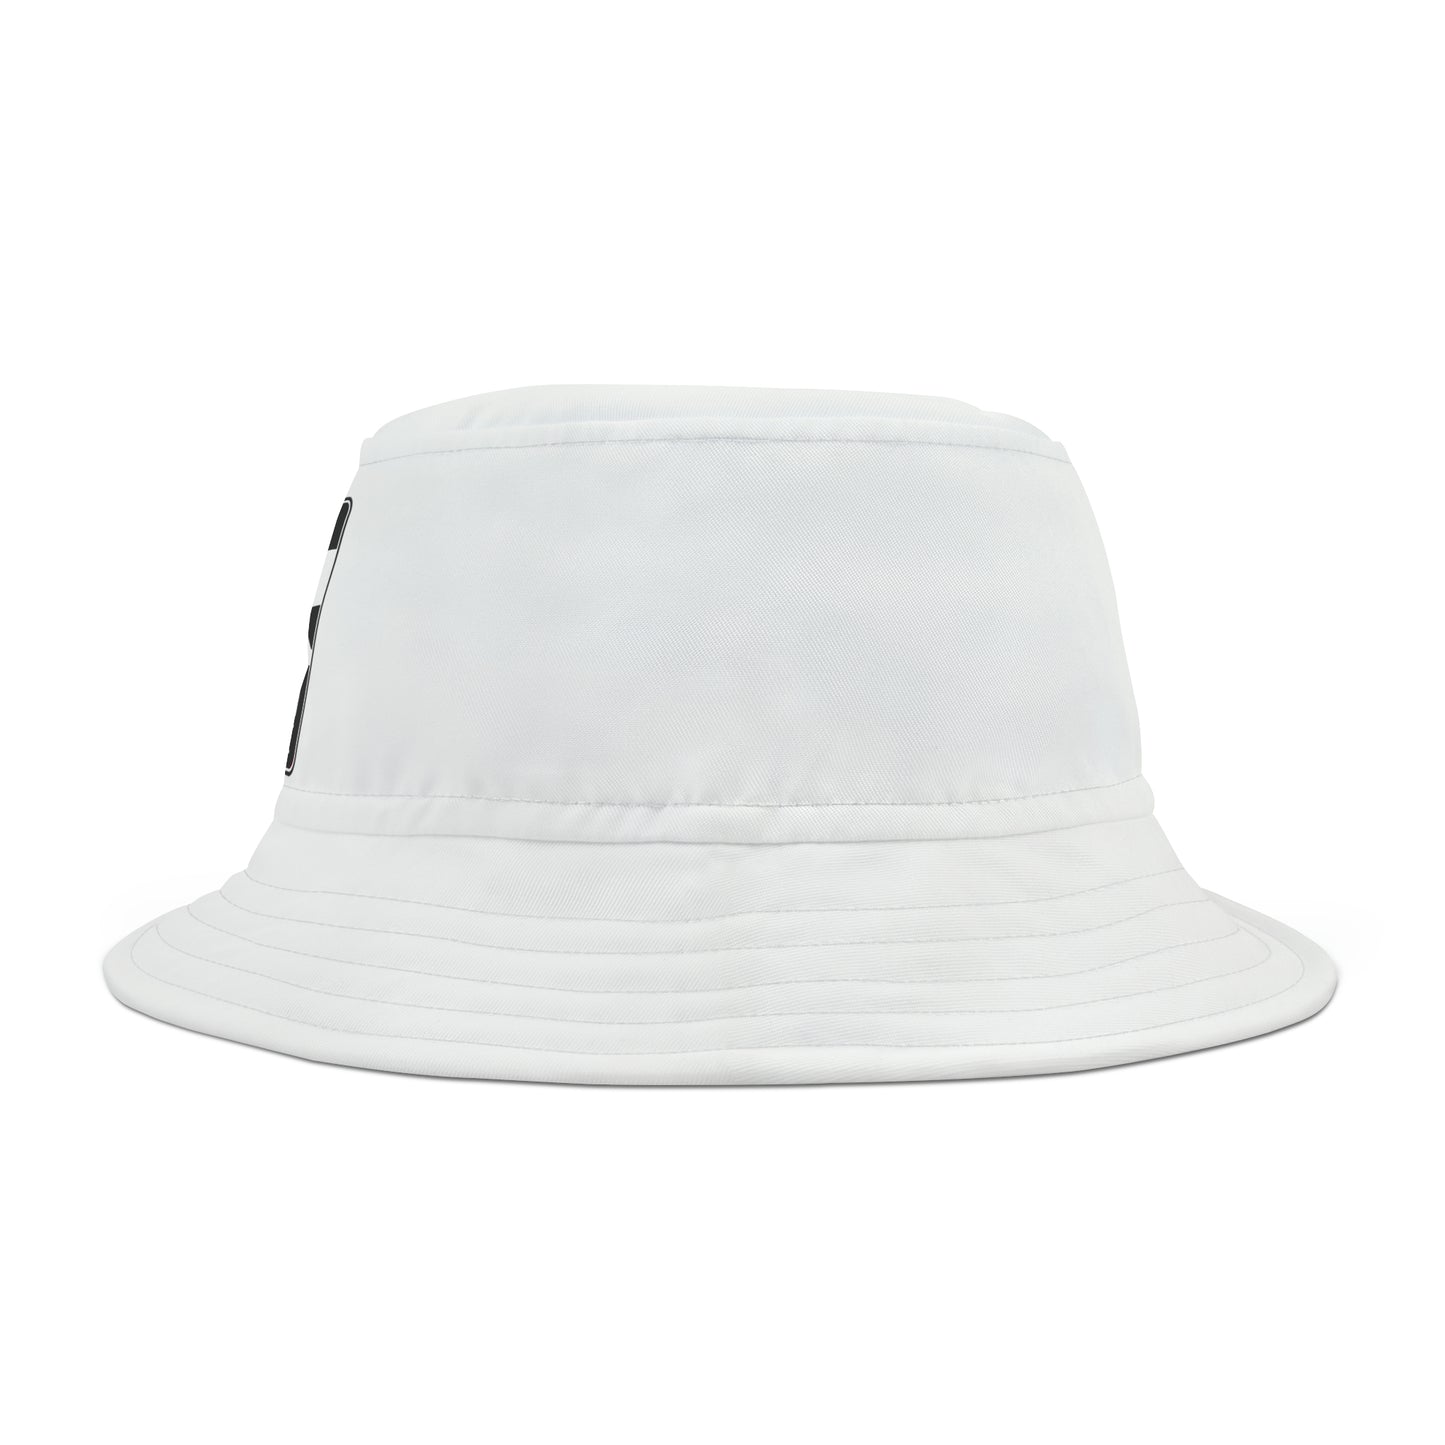 MHS B&W Square Logo - Bucket Hat - White